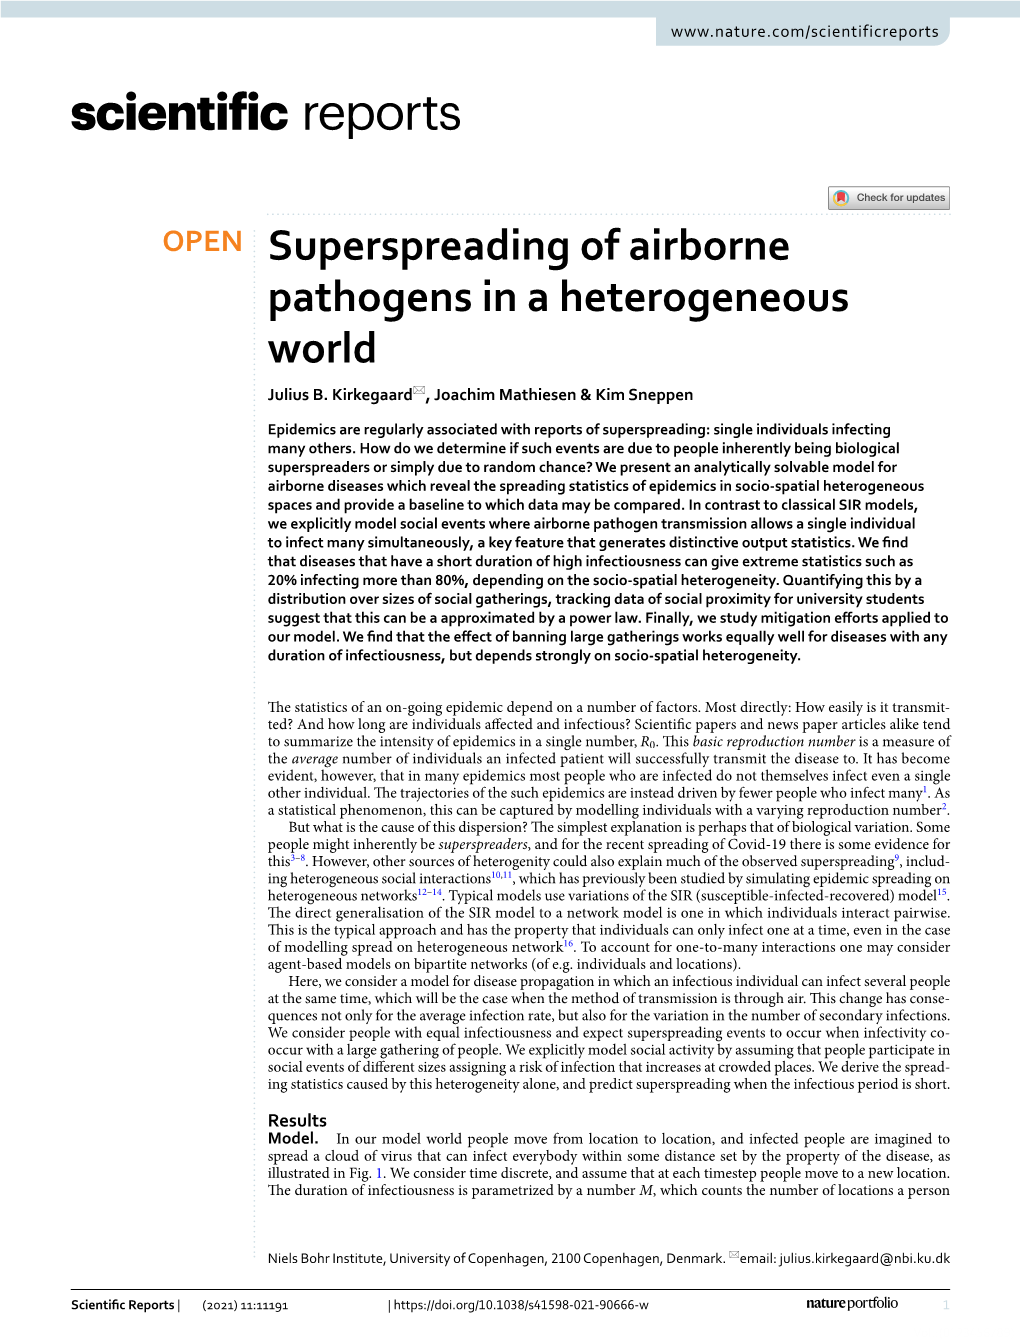 Superspreading of Airborne Pathogens in a Heterogeneous World Julius B